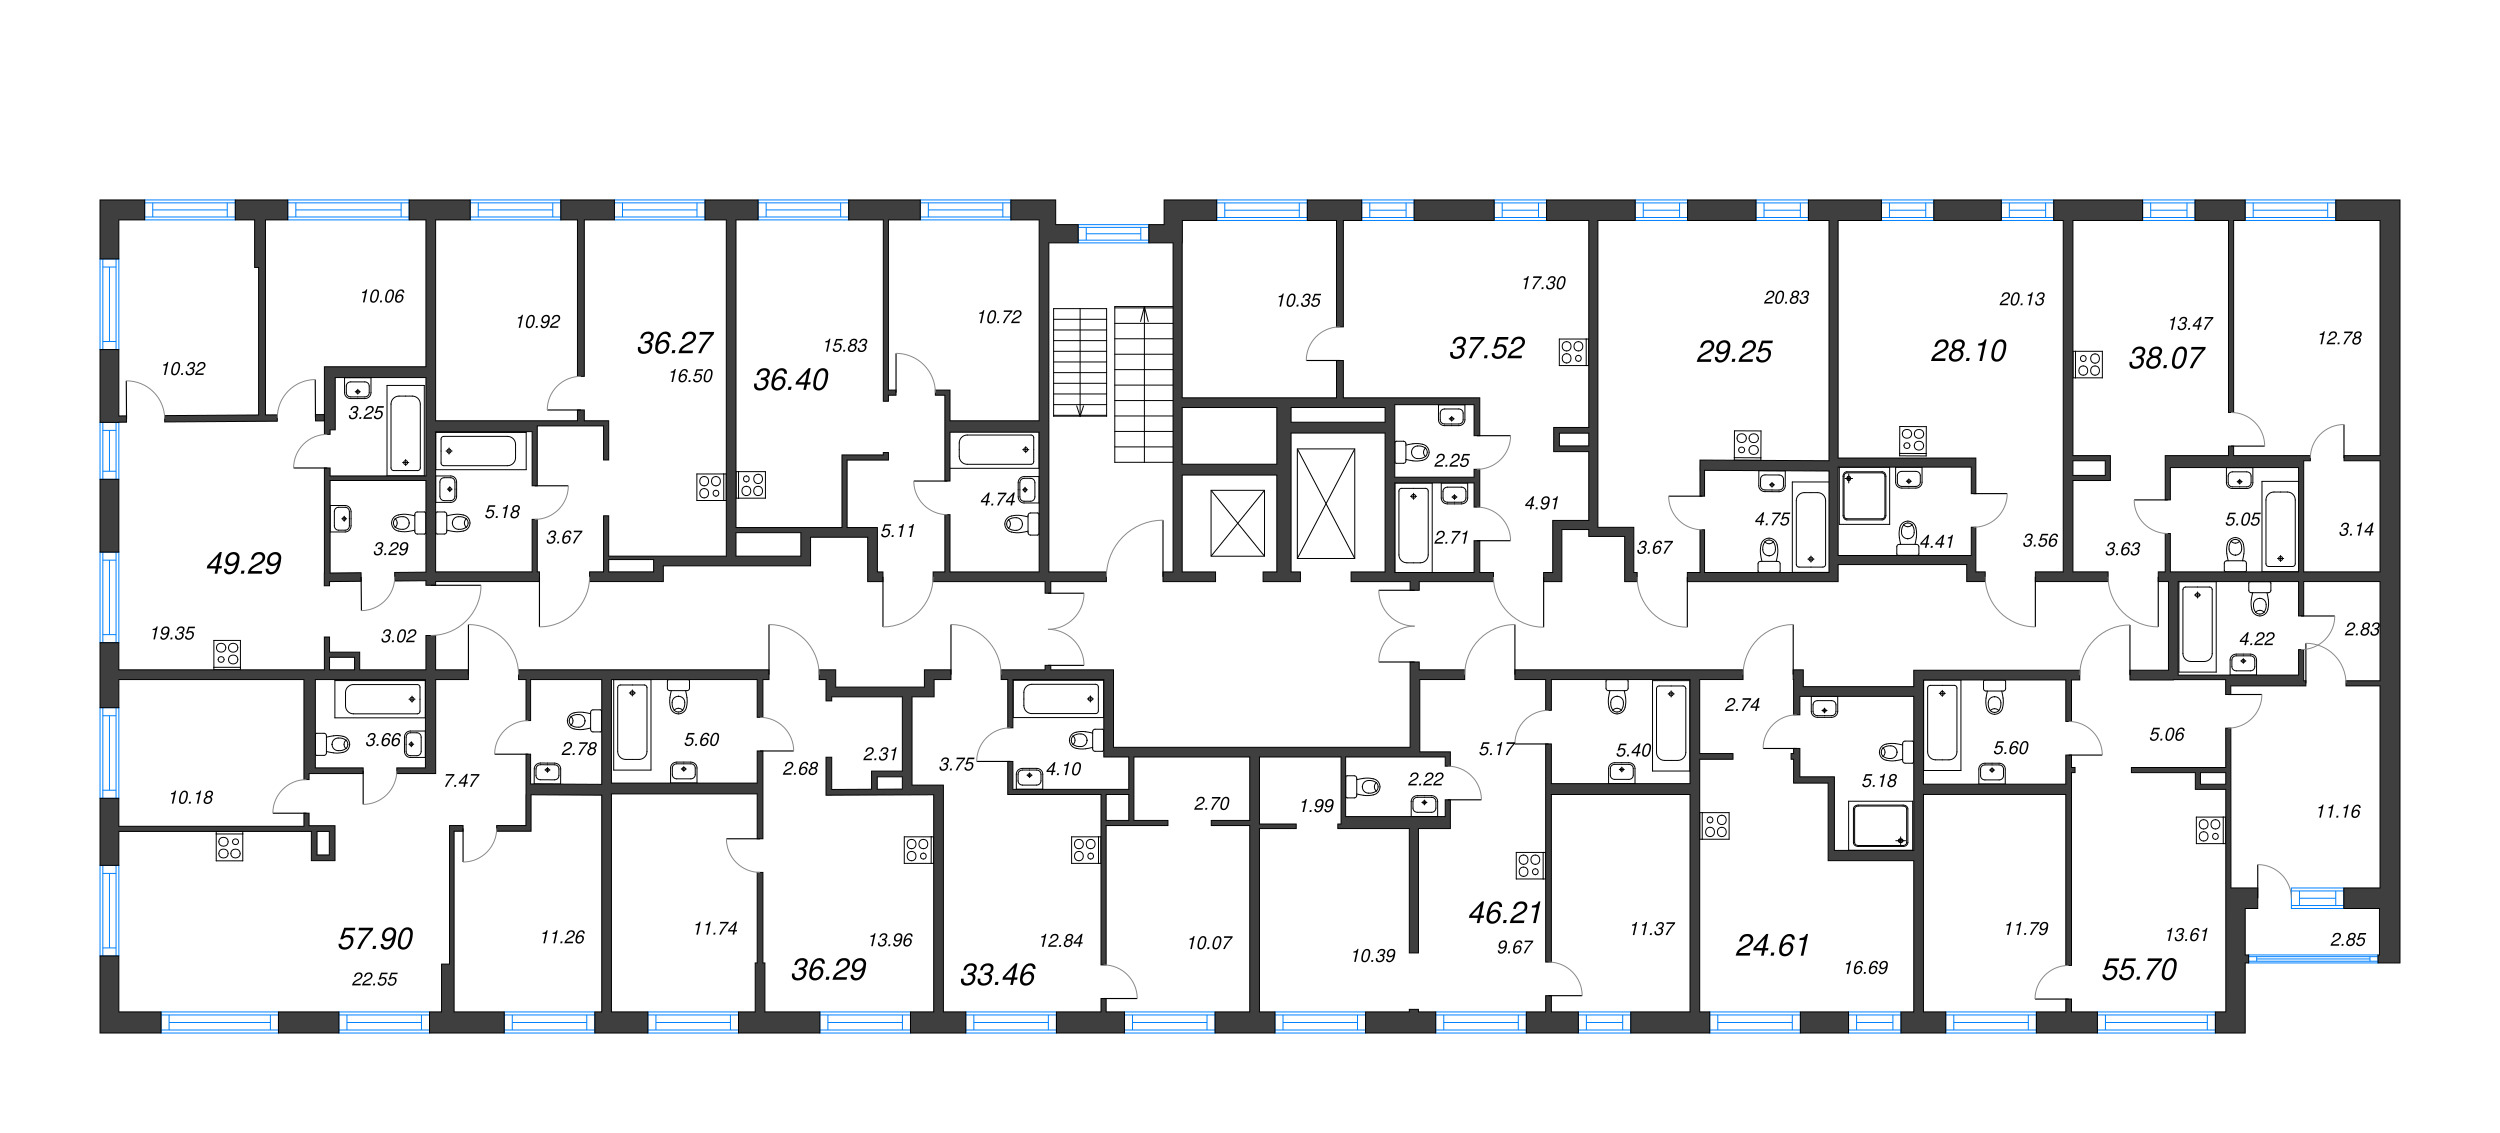 2-комнатная (Евро) квартира, 36.4 м² - планировка этажа